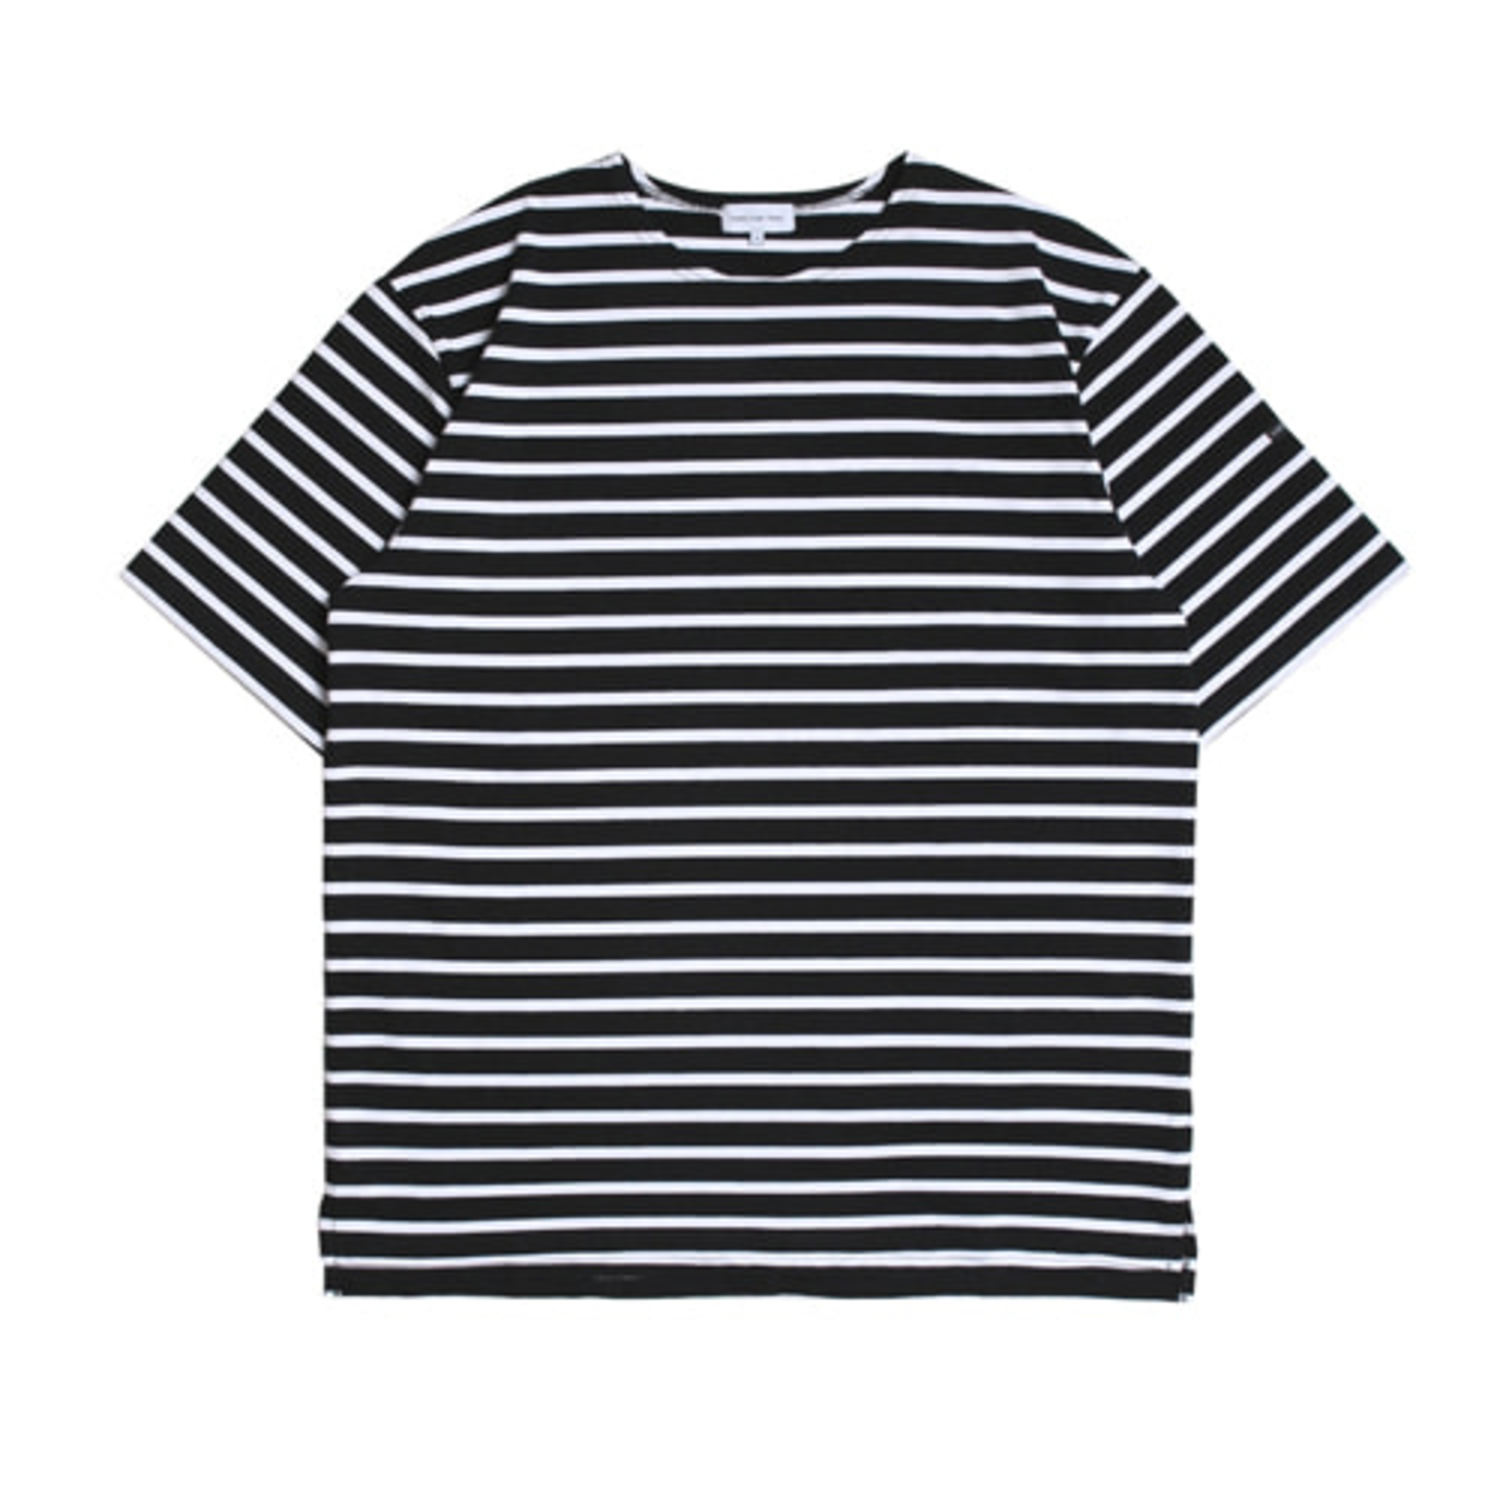 Half Sleeved Basque Shirts (Black Stripes)